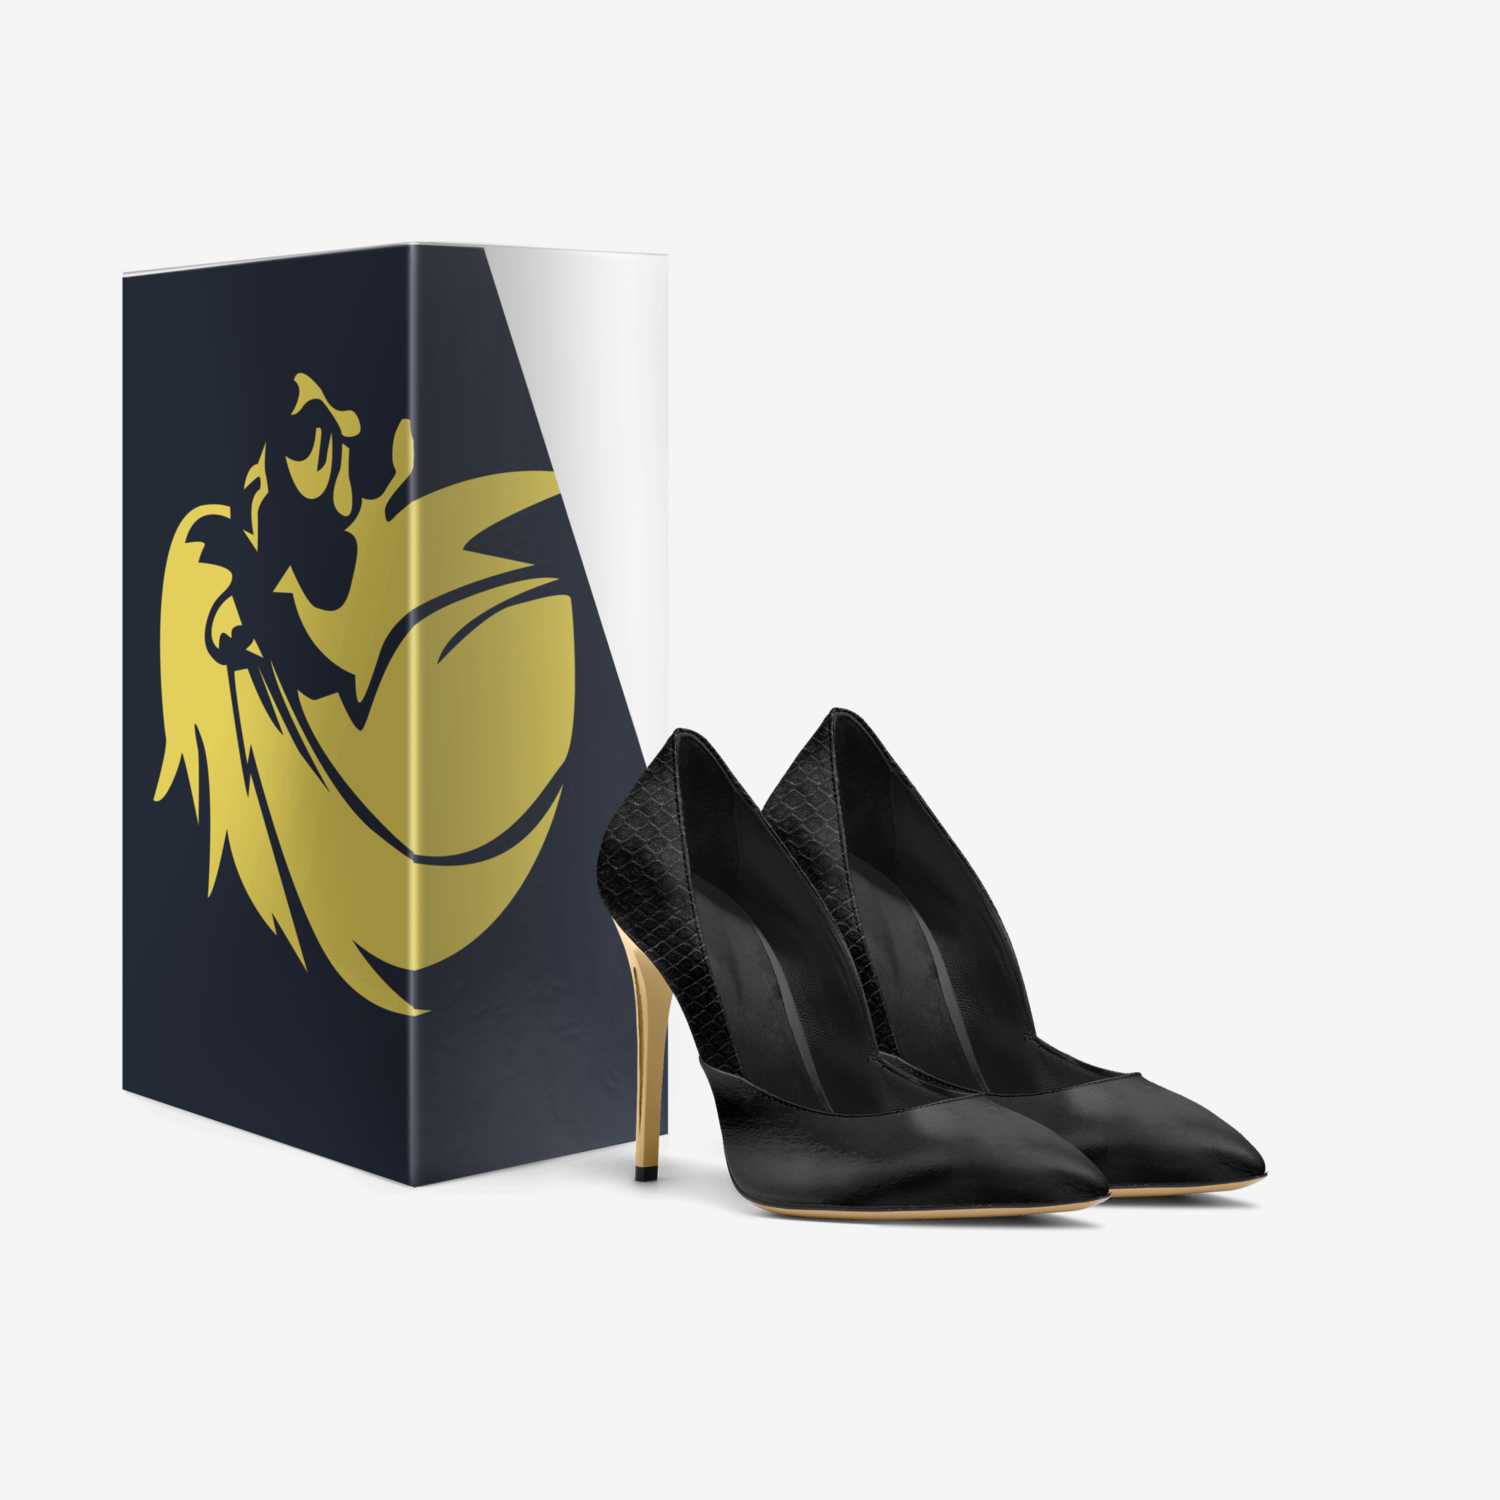 Hera custom made in Italy shoes by Ahmed F M Hamdan | Box view